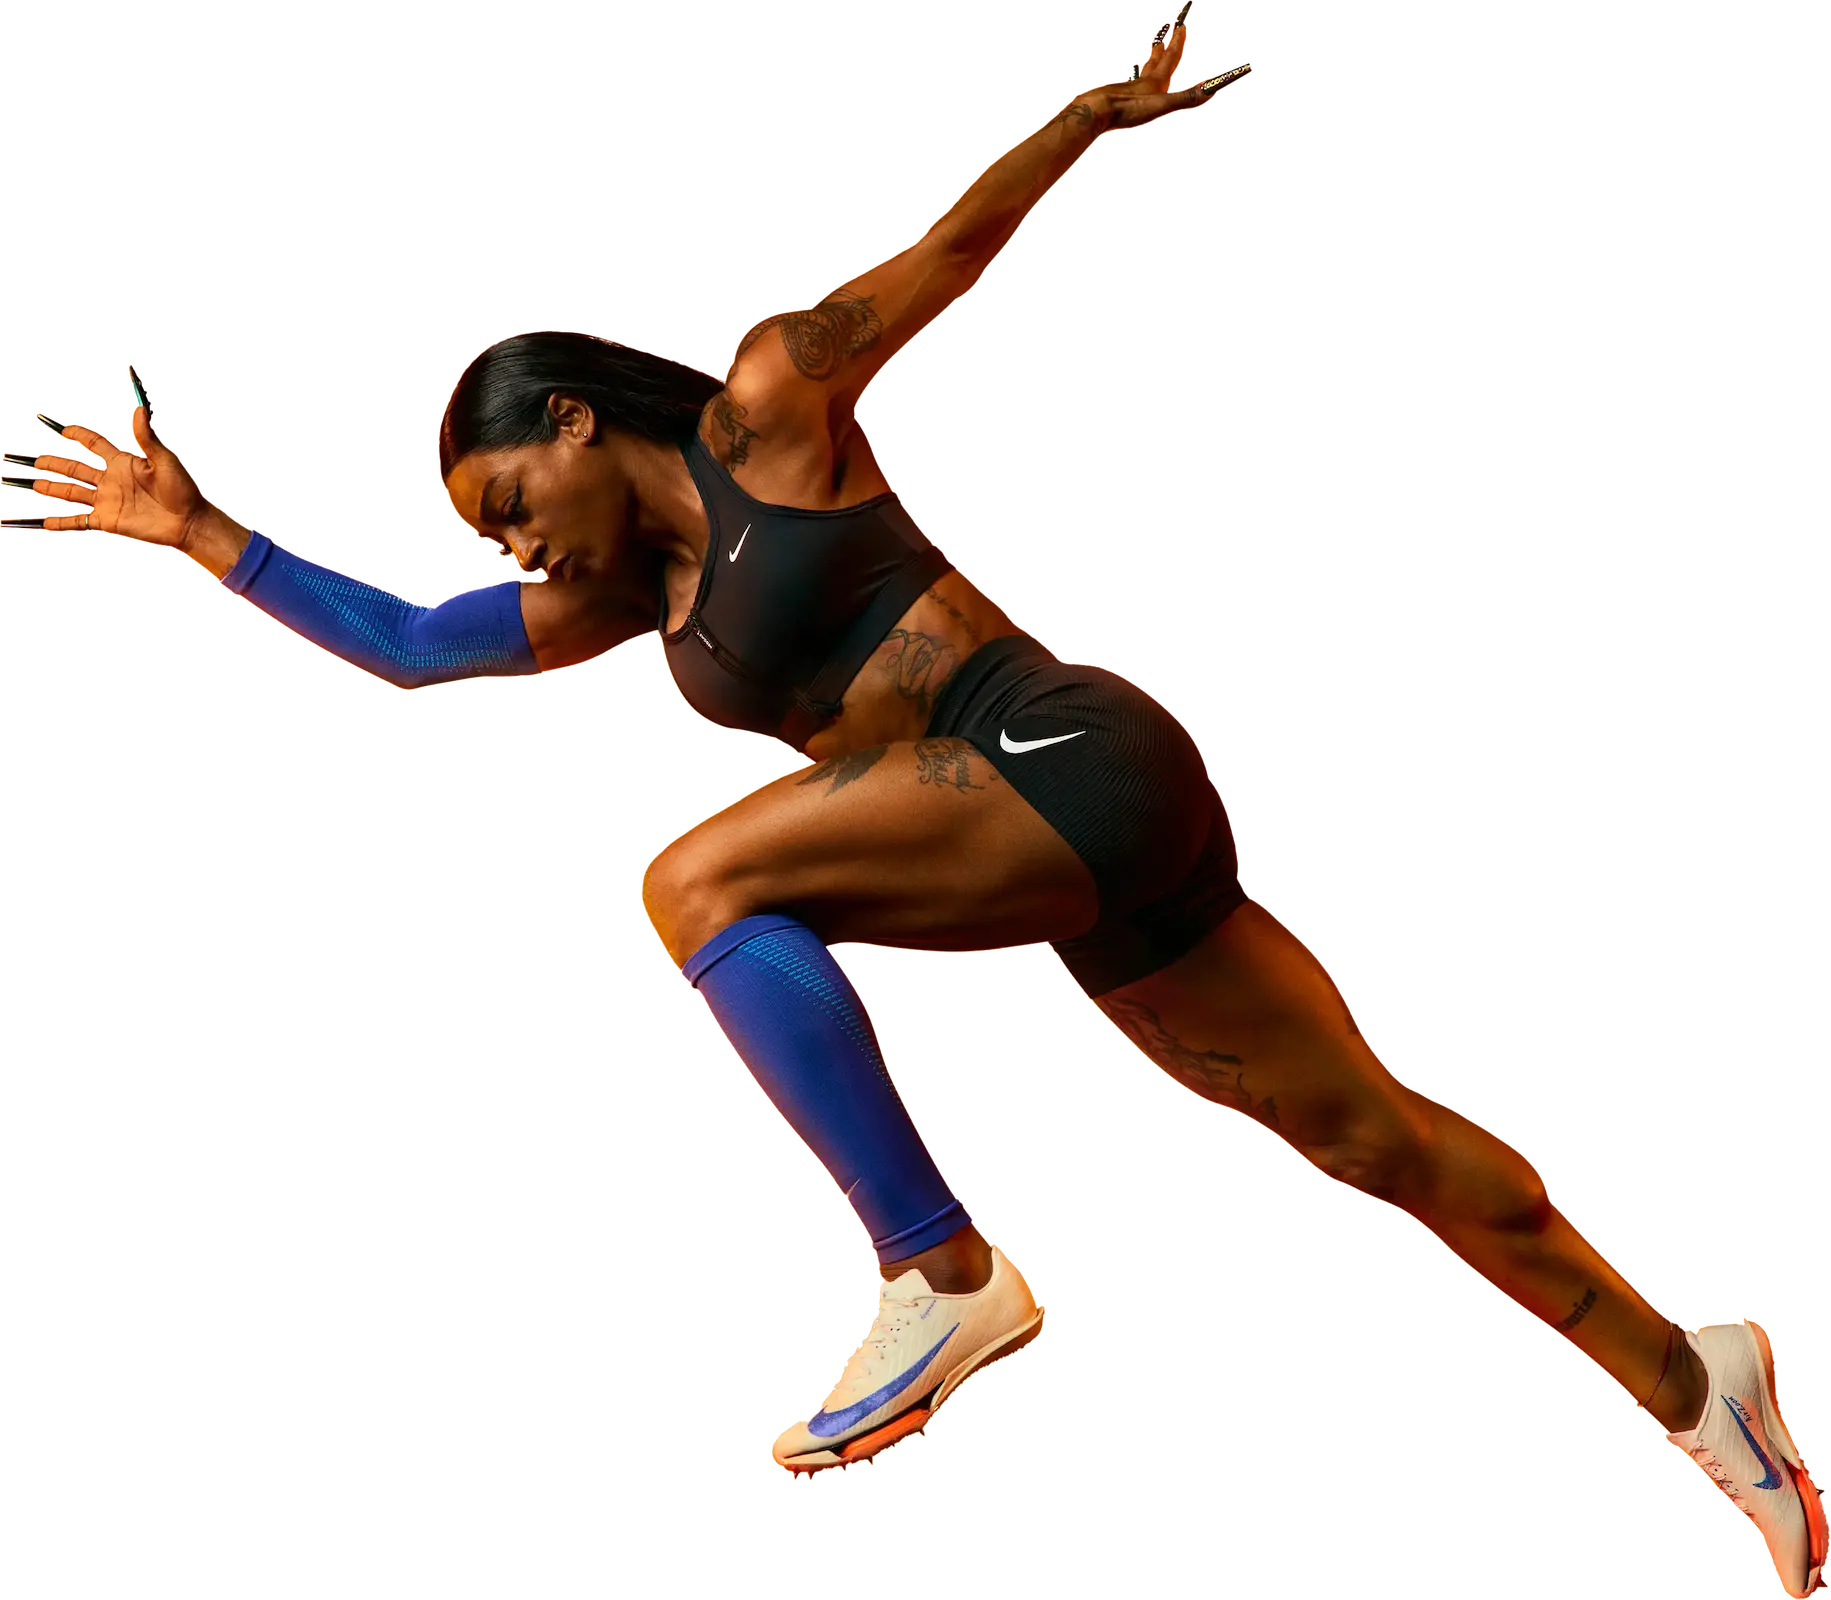 Sha'Carri Richardson wearing Nike Running apparel and Air Zoom Maxfly